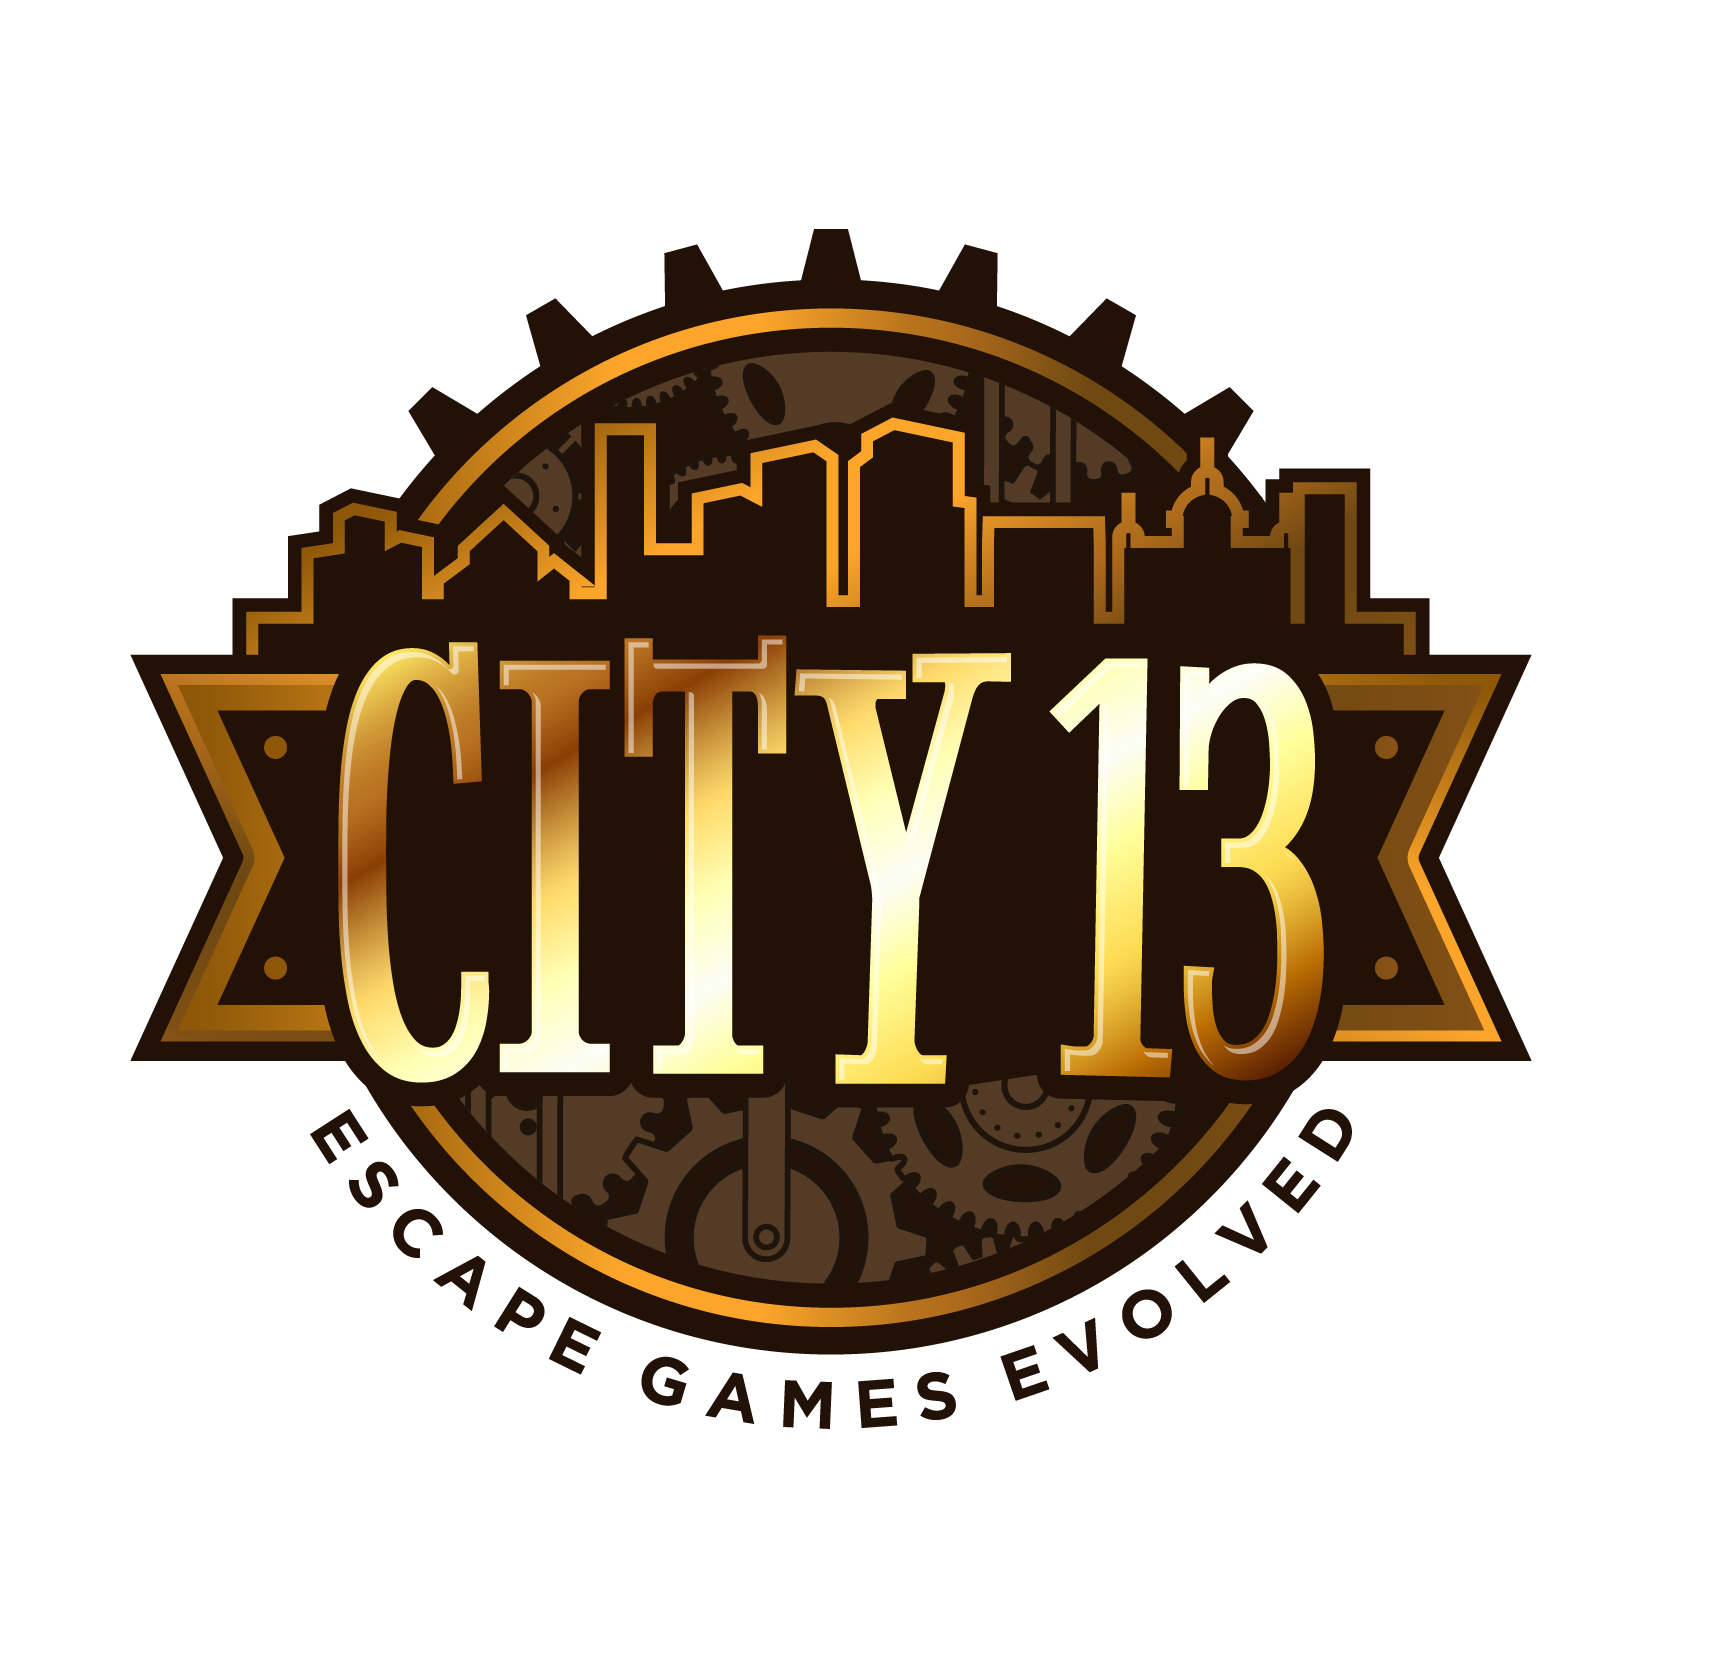 City 13